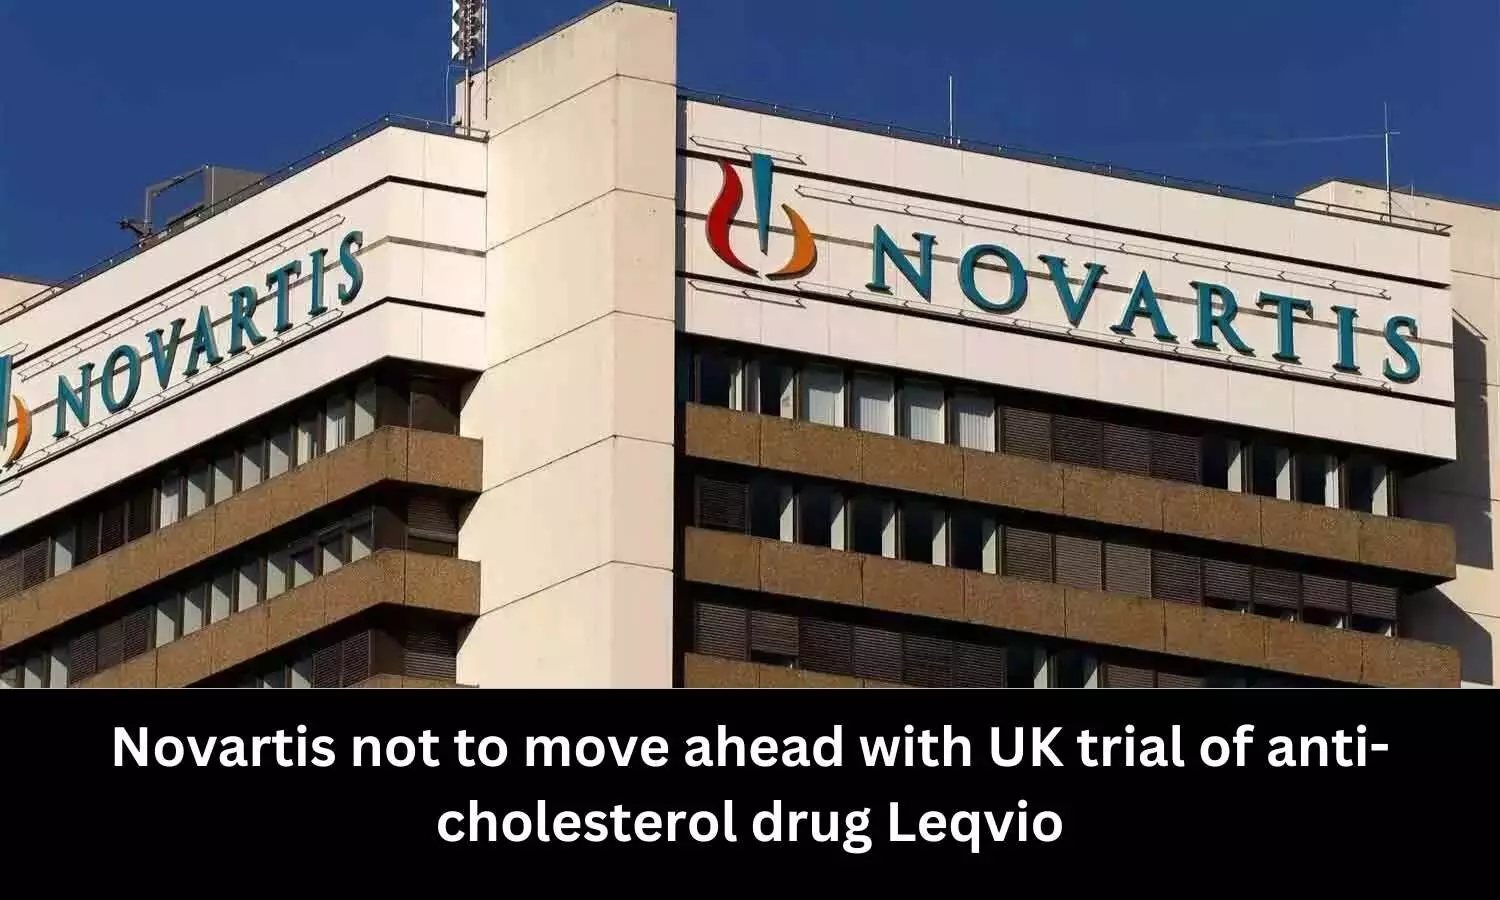 Novartis halts UK trial of anticholesterol drug Leqvio